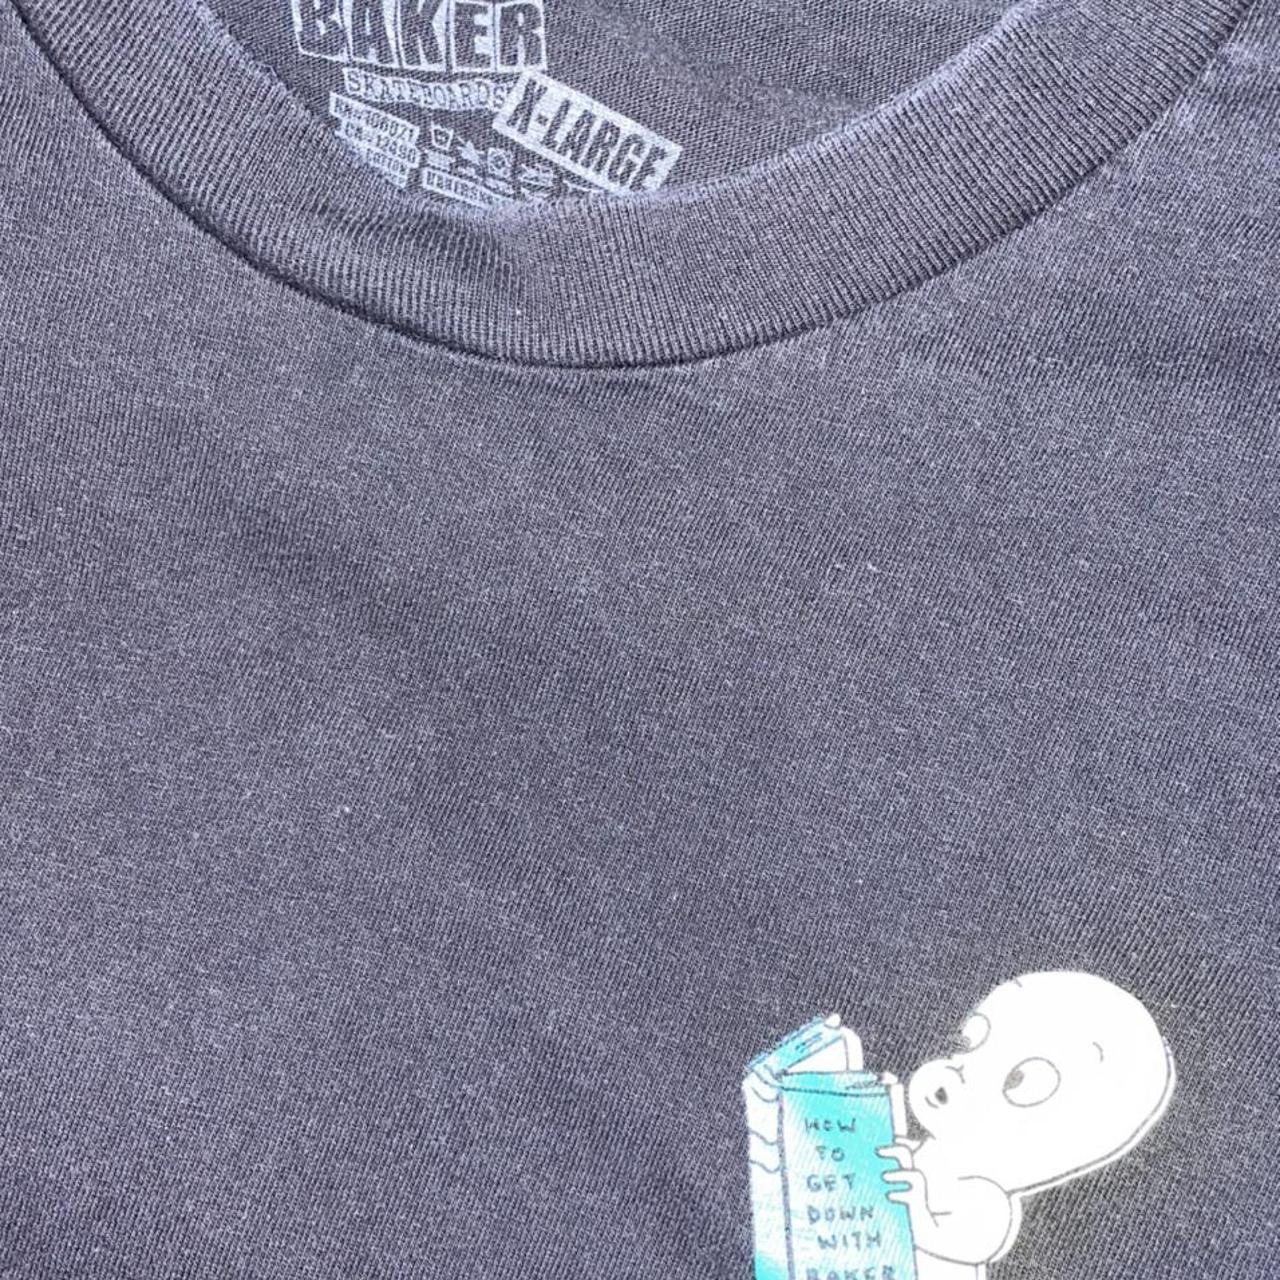 Product Image 2 - -Baker Casper tee 
-Size XL